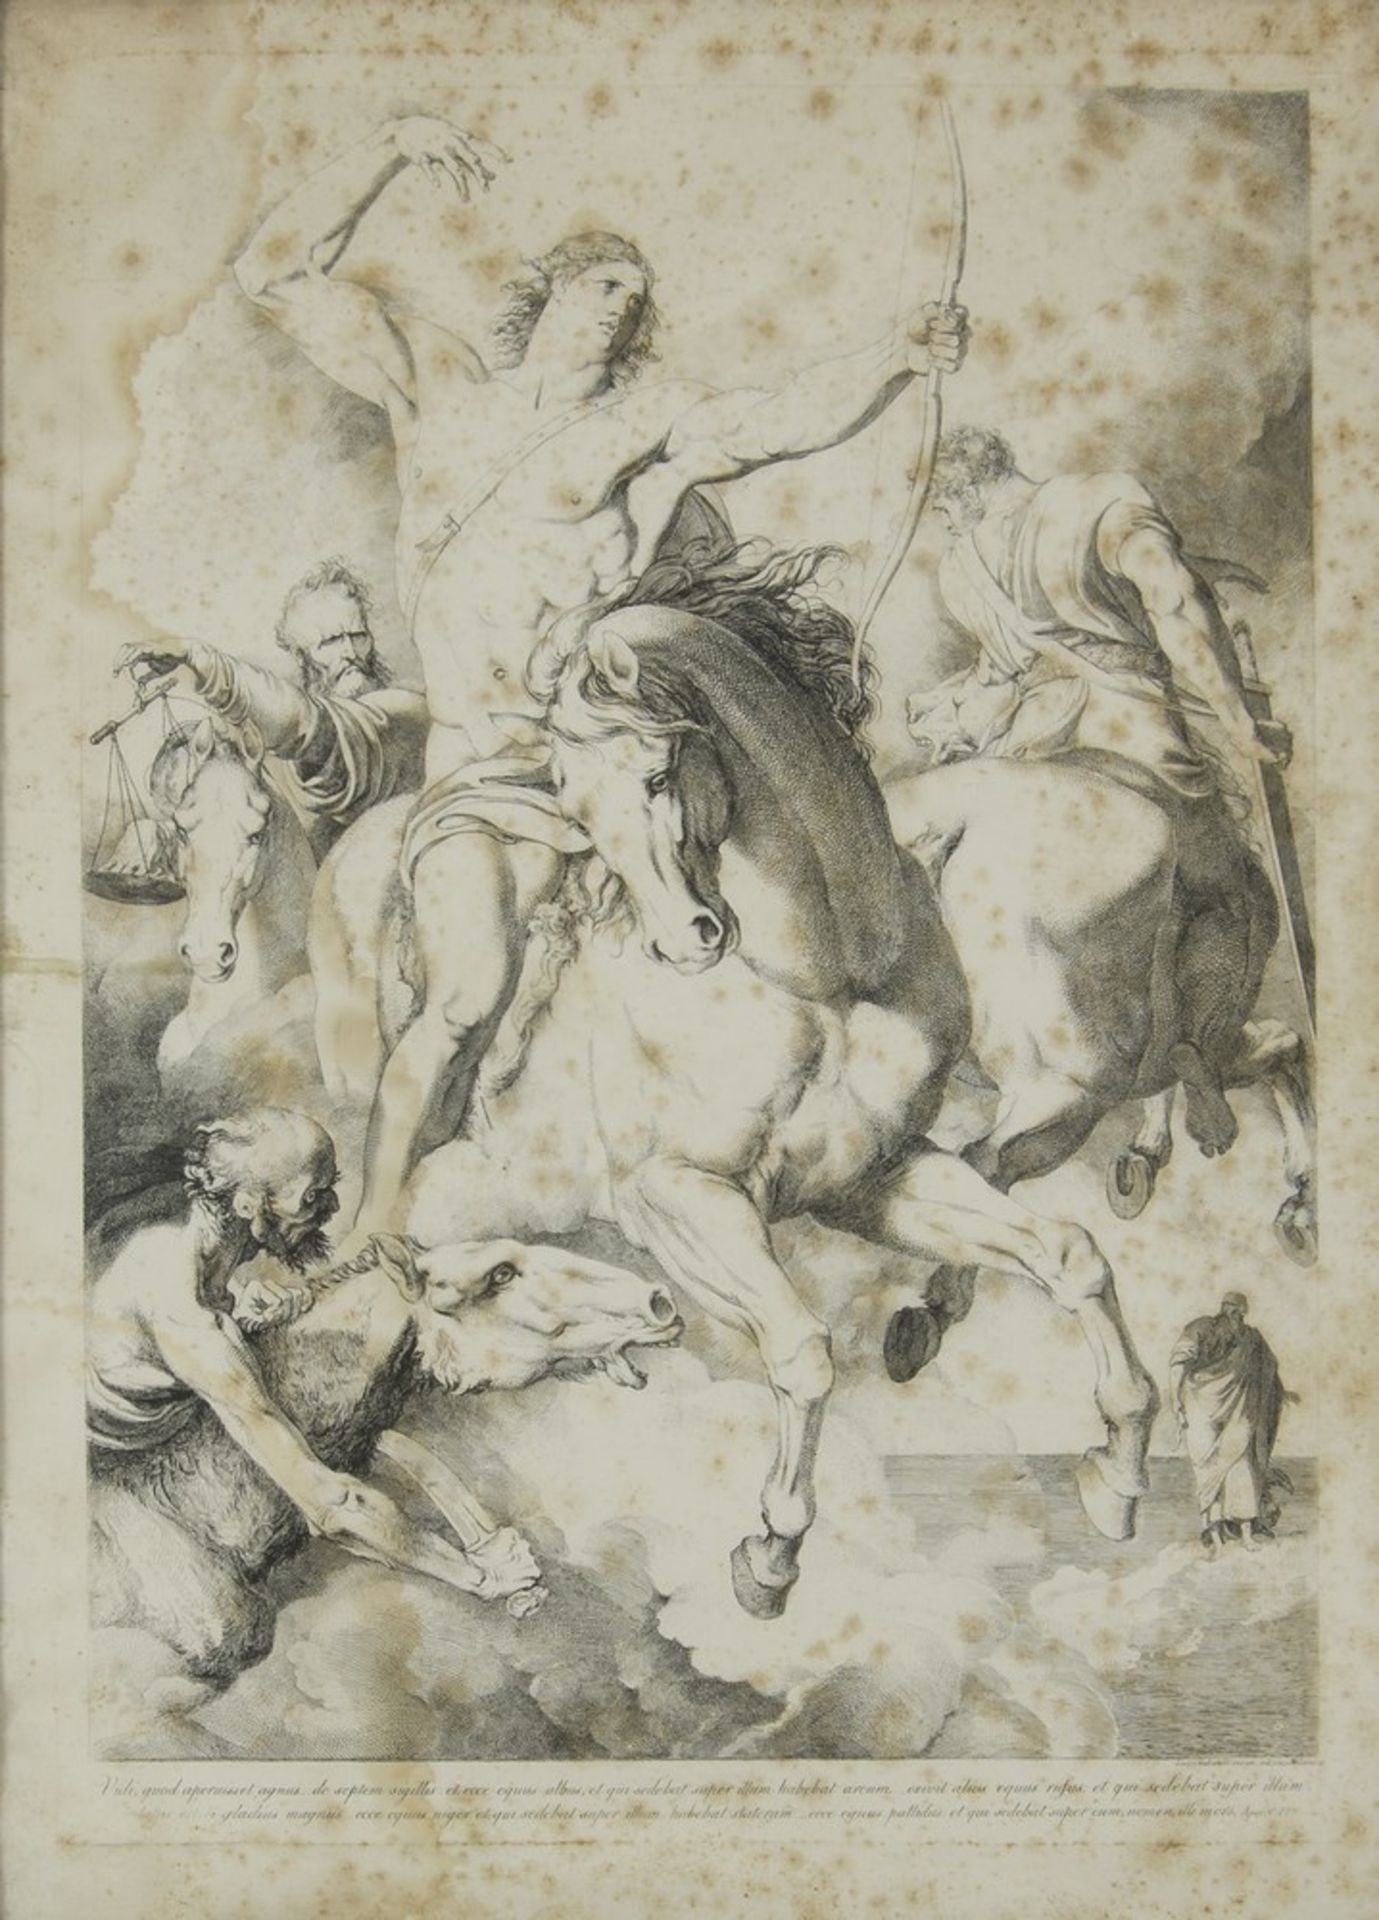 LUIGI SABATELLI (Florence 1772 - Milano 1850) VISUAL OF APOCALISSE Engraving, cm. 68.5 x 49.5. LUIGI